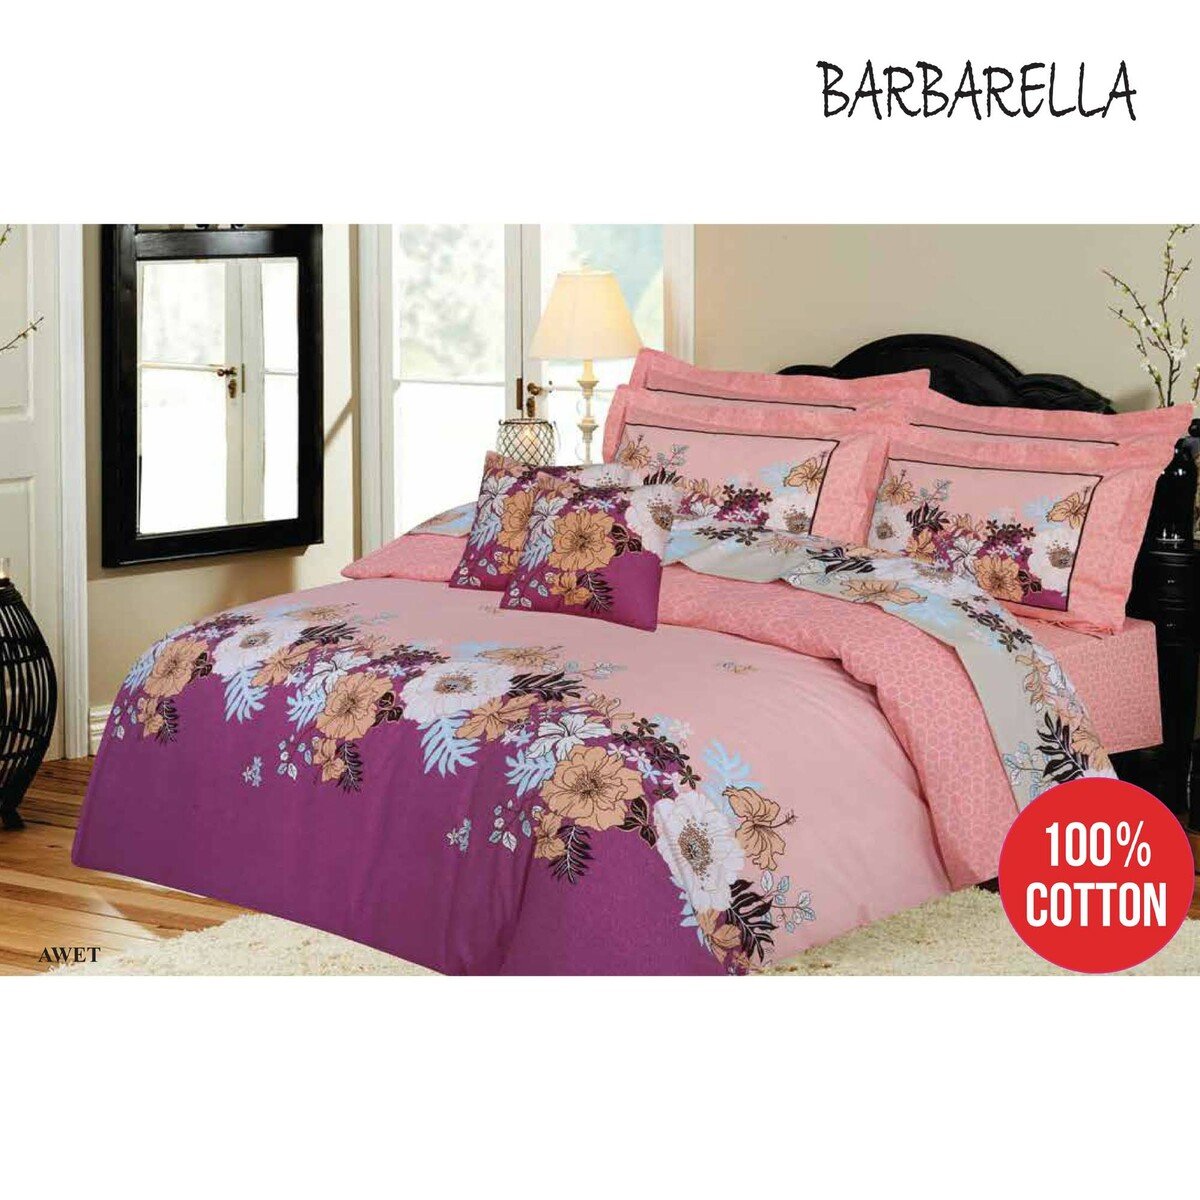 Barbarella Comforter Set Double 193x241cm Awet 4pcs Set